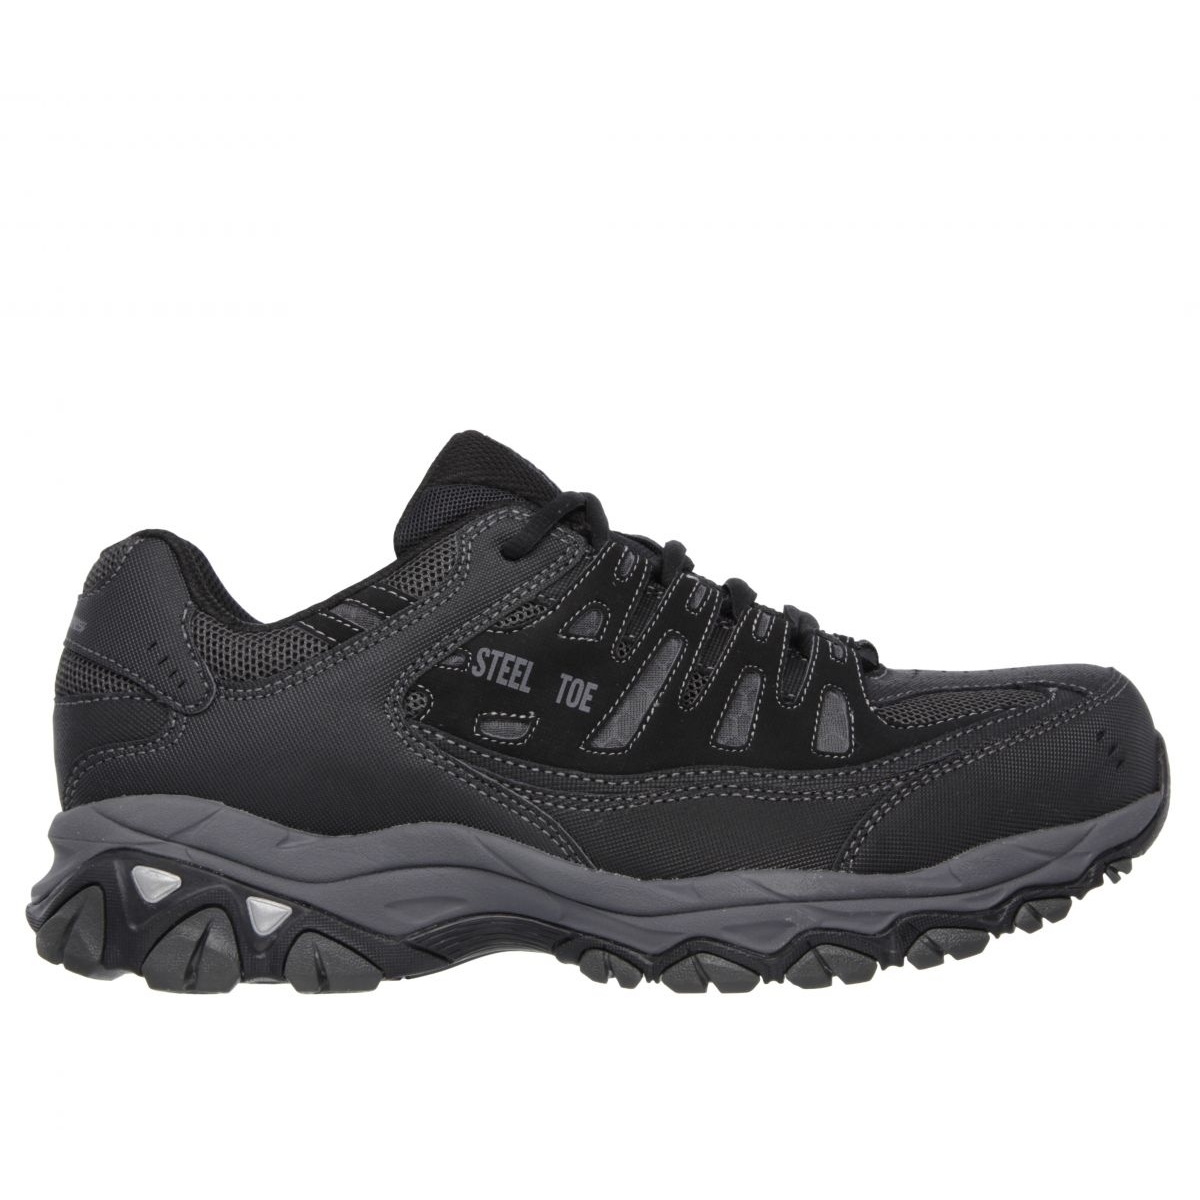 Skechers Men's Cankton-U Industrial Shoe 7 BLACK/CHARCOAL - BLACK/CHARCOAL, 8.5 Wide